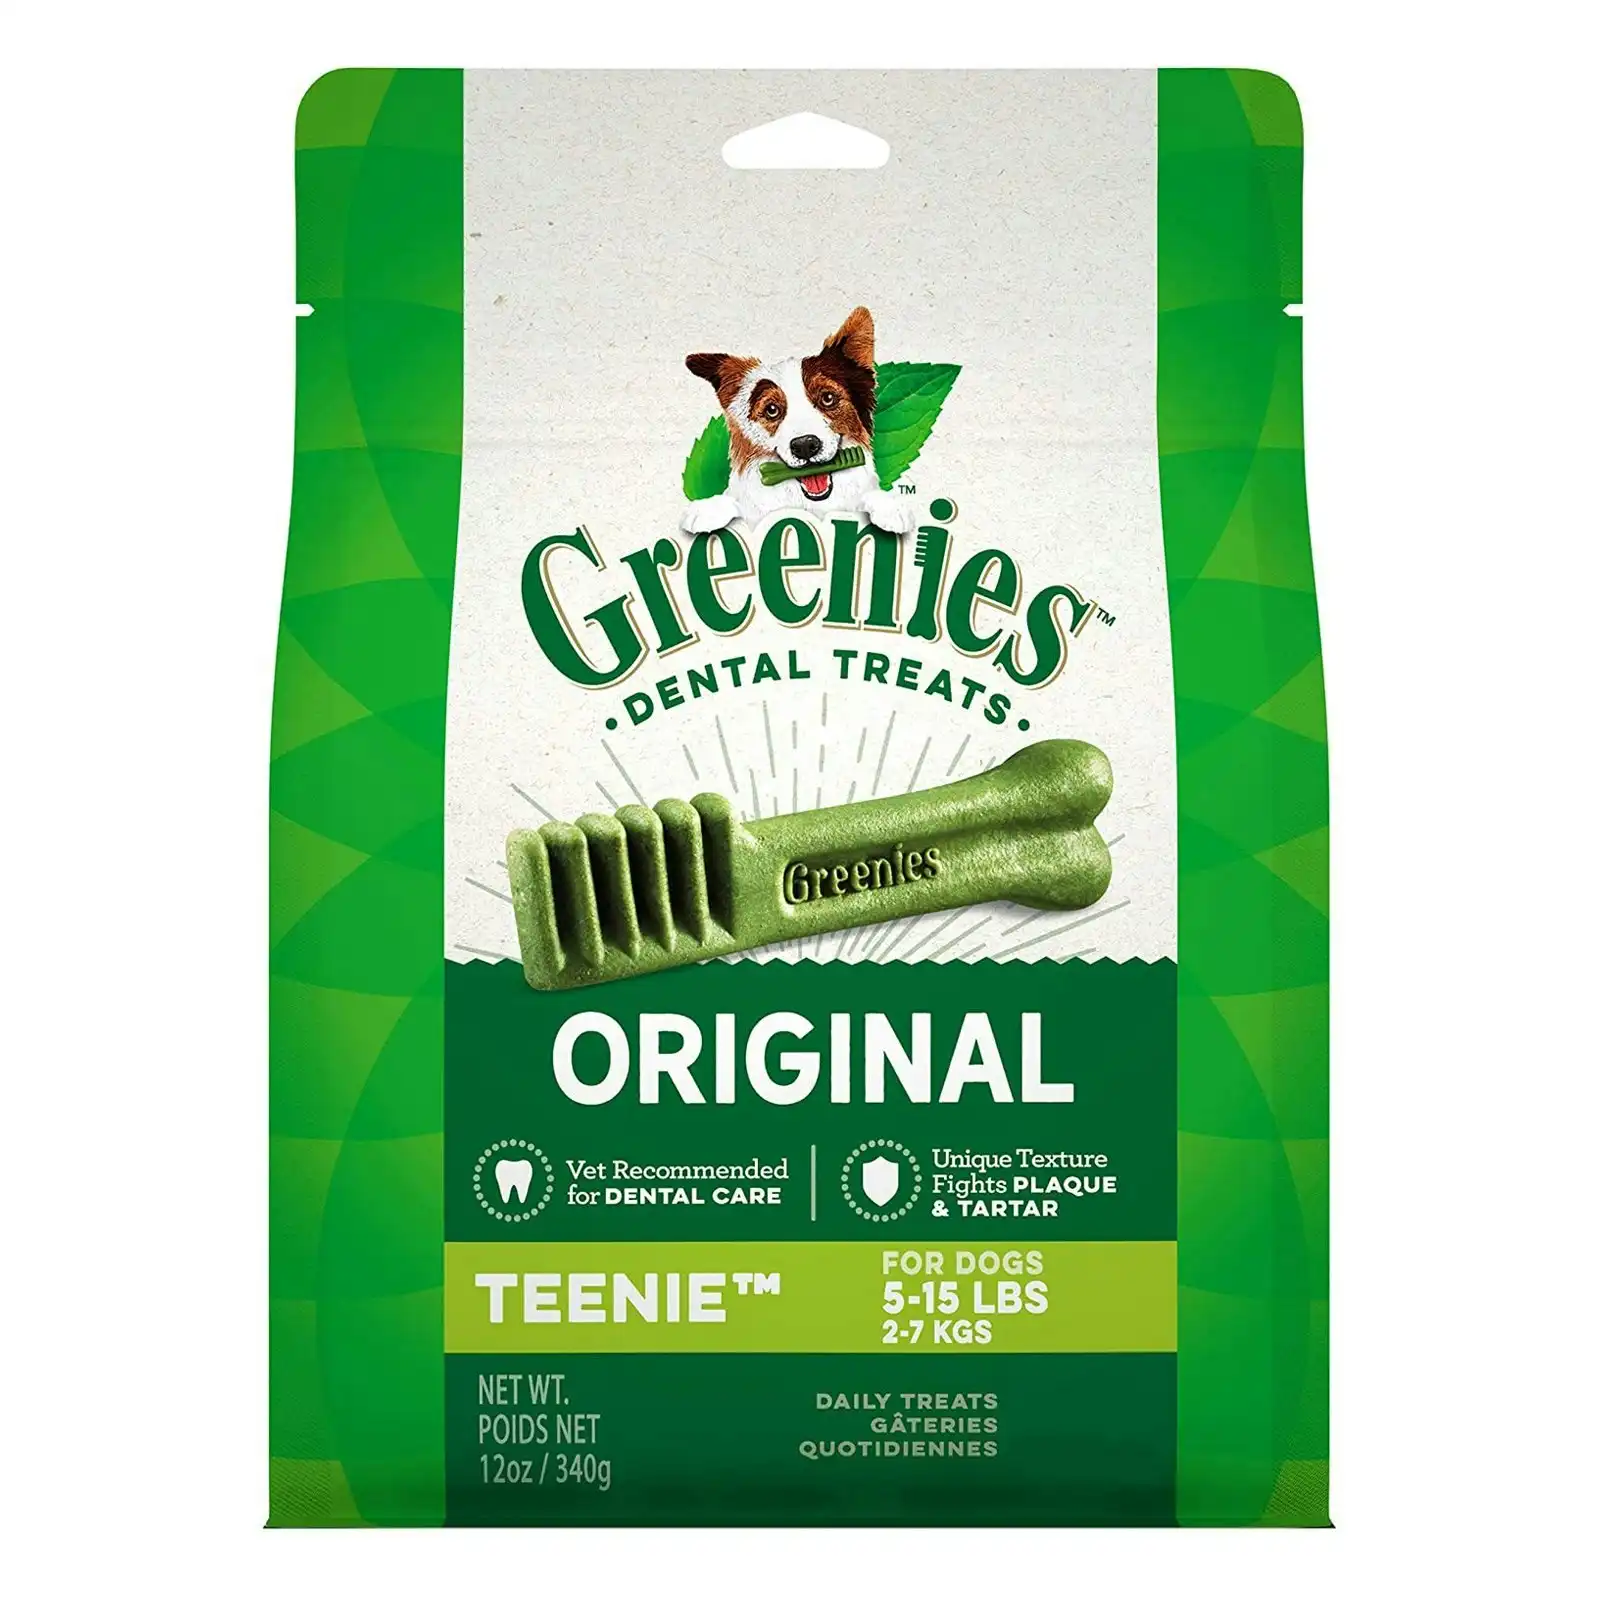 GREENIES Original Dental Treats Teenie for Dogs 2 to 7 Kg 510 Gms